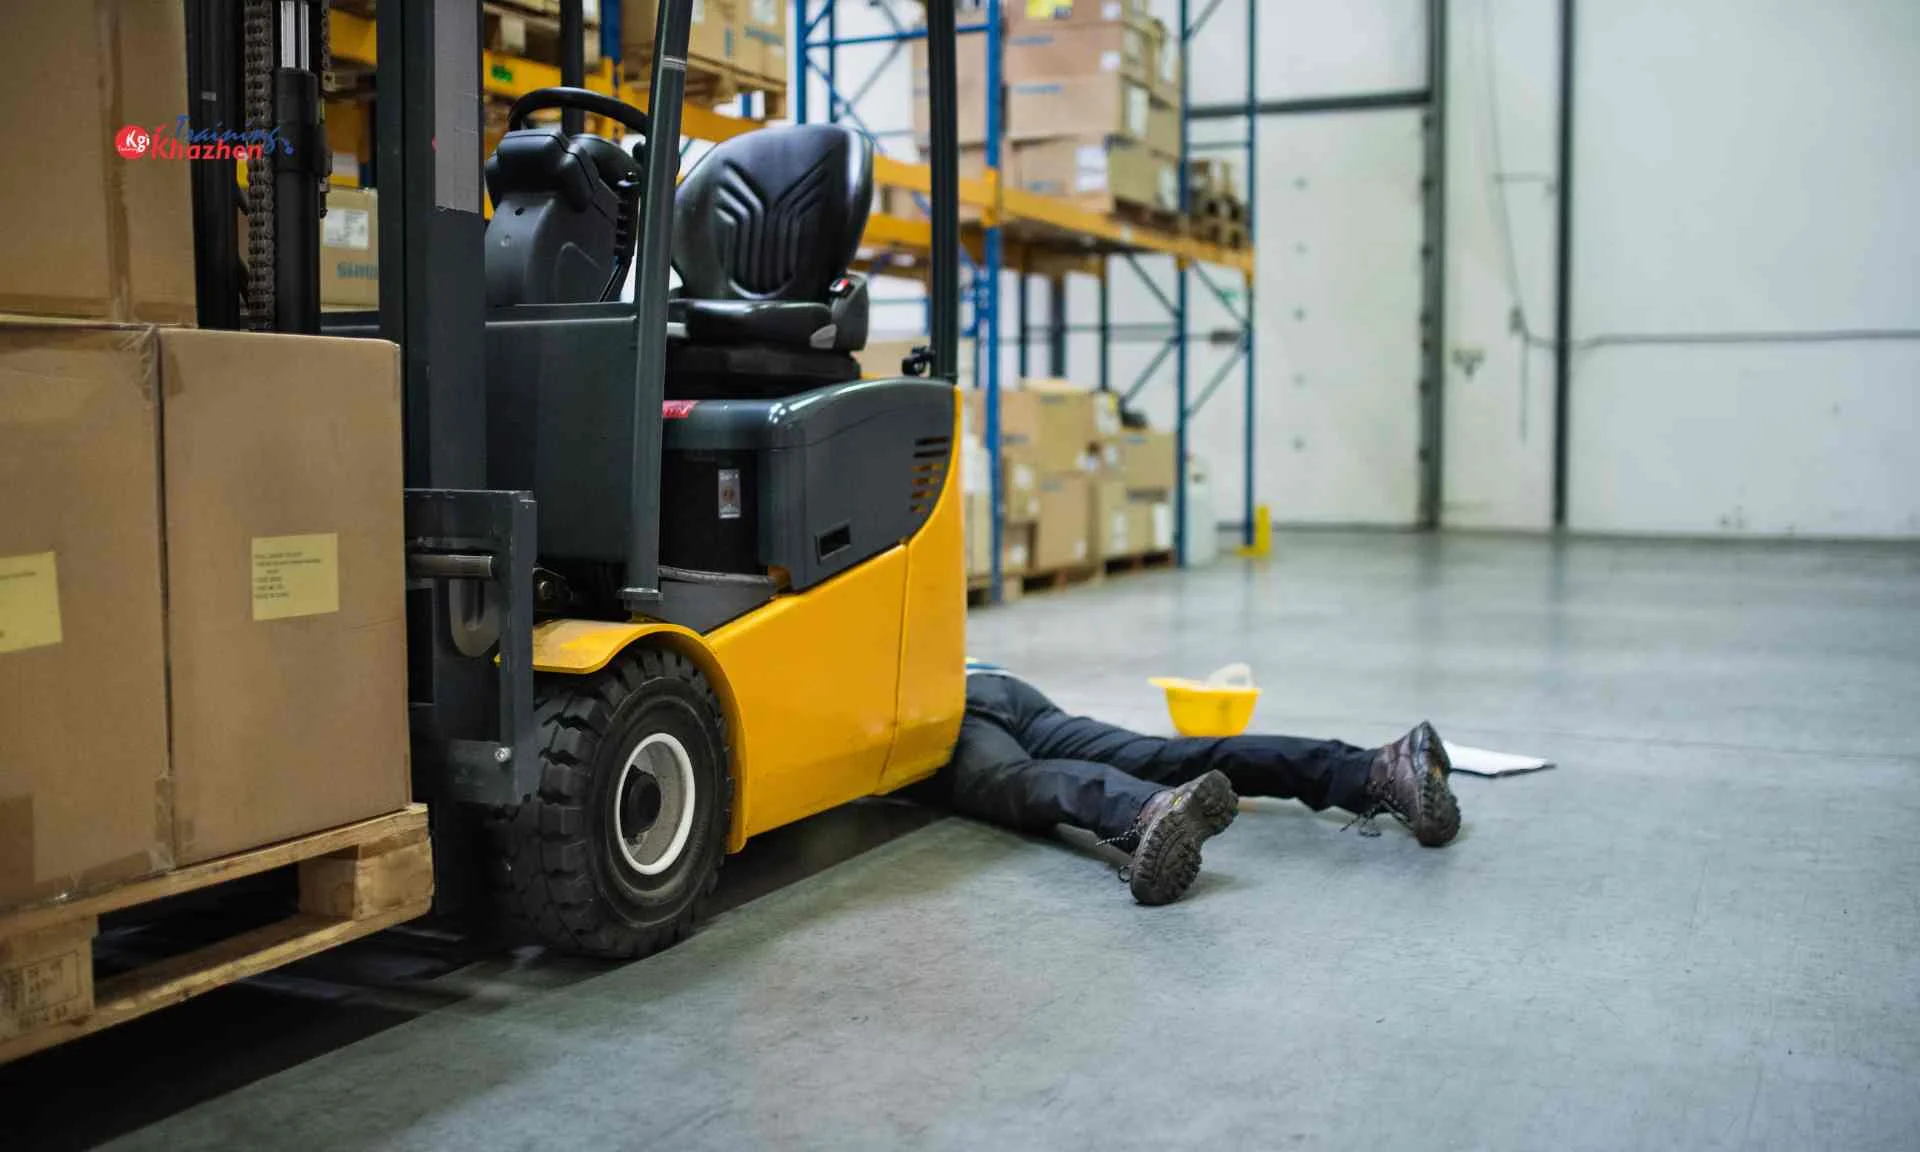 Menghindari Kesalahan Fatal: Panduan Keselamatan untuk Operator Forklift